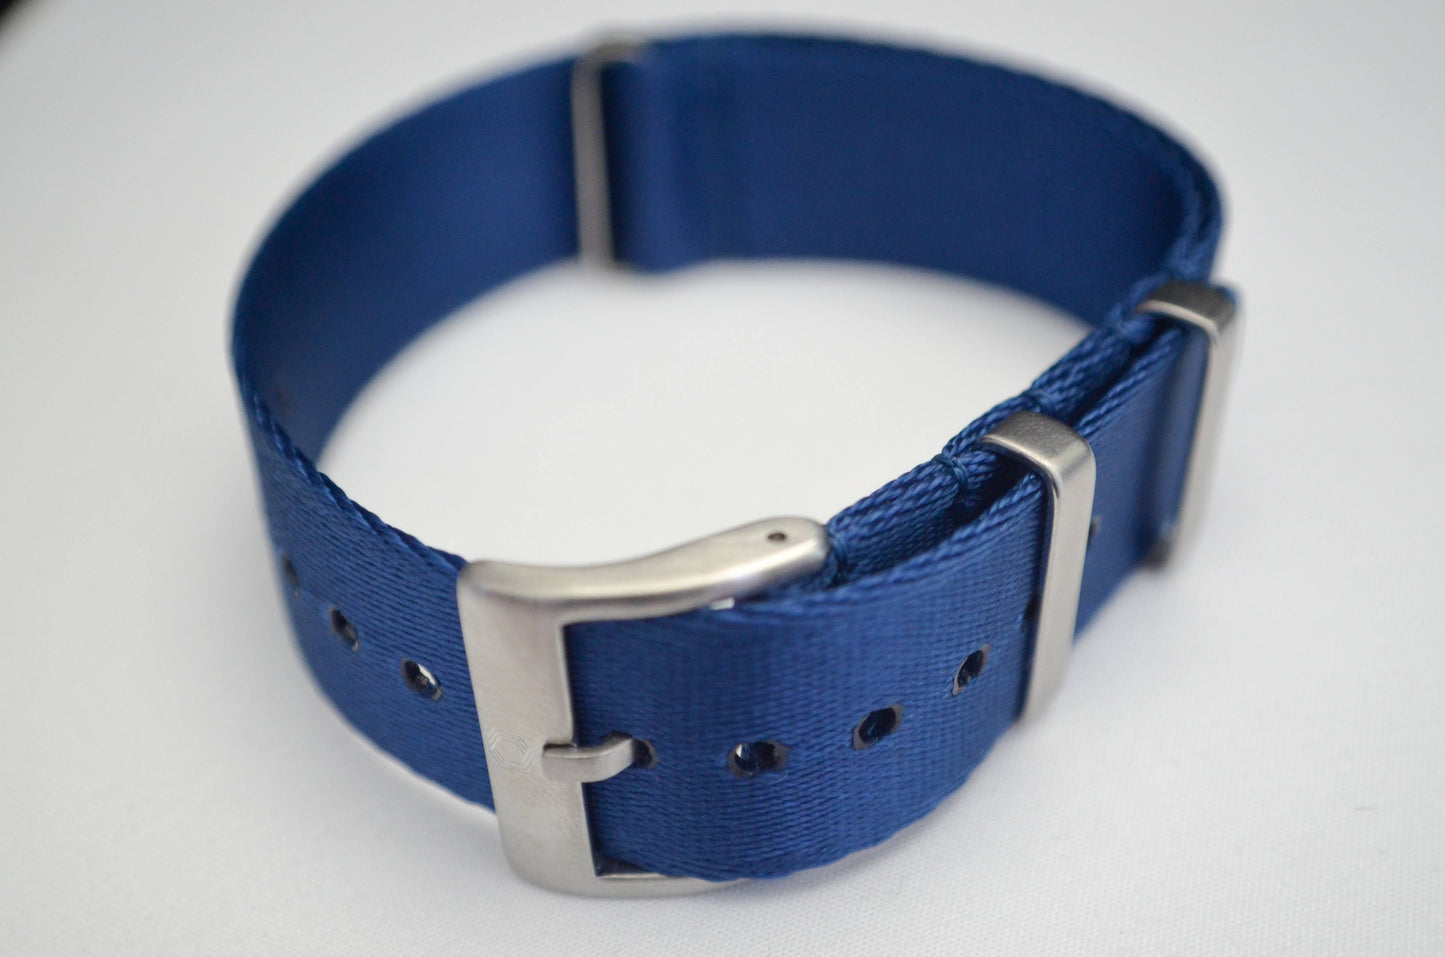 The 'Gimli' - Single pass blue watch strap made of a soft seatbelt nylon